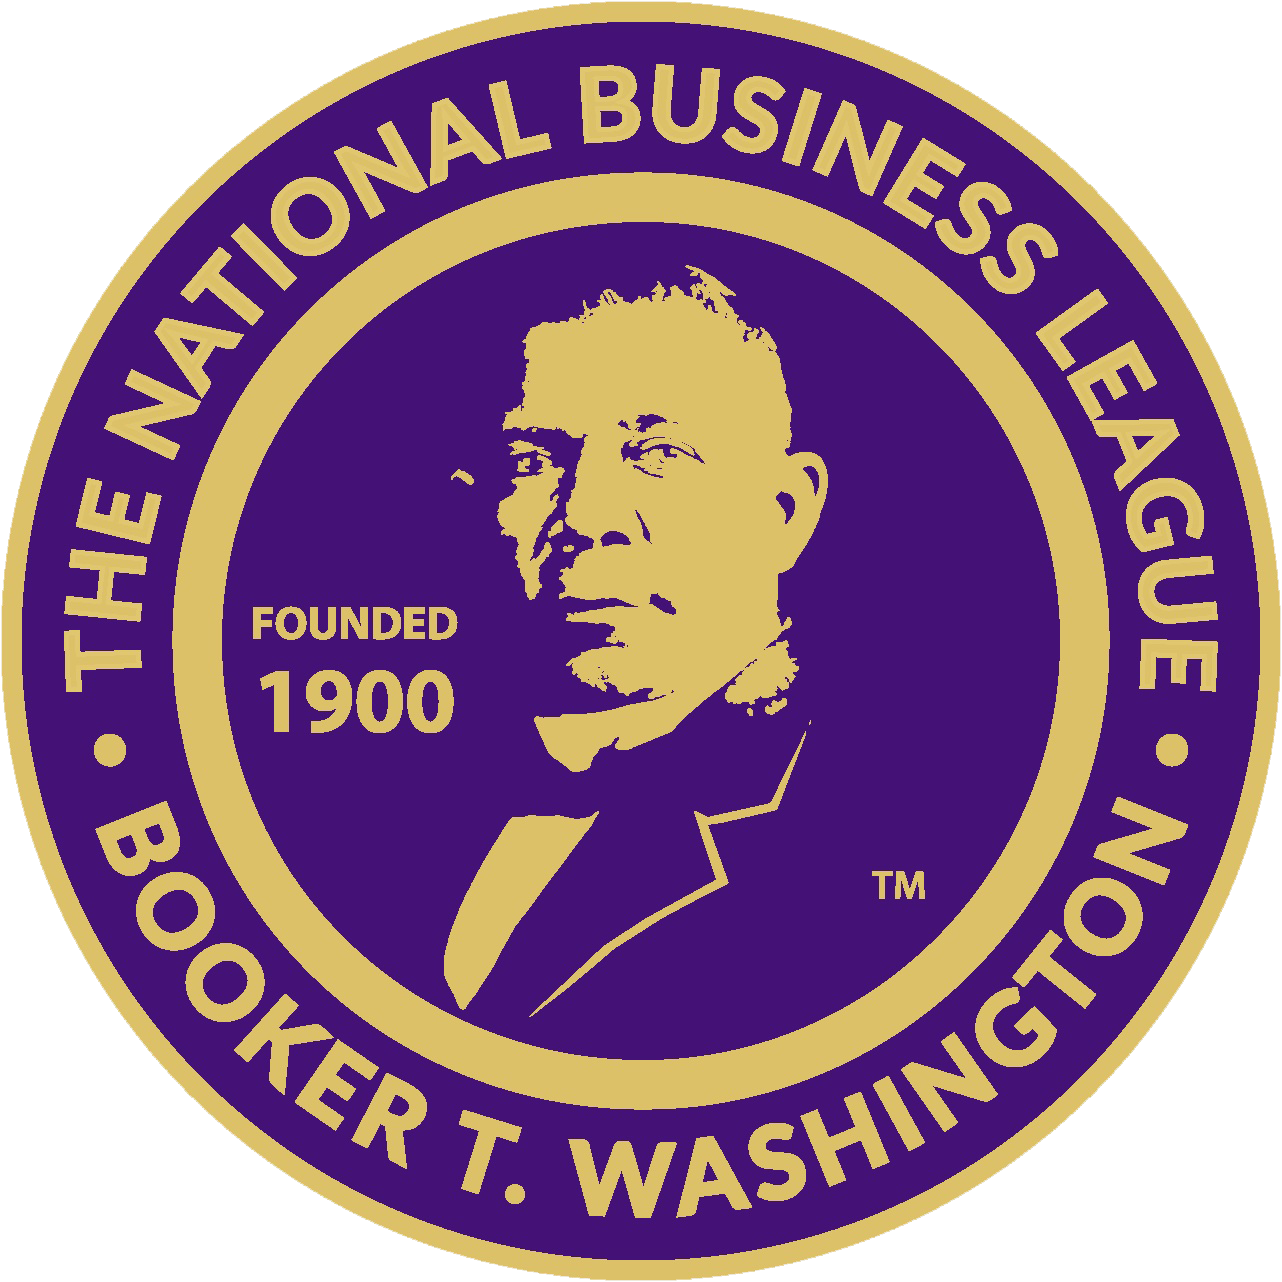 National Business League Logo